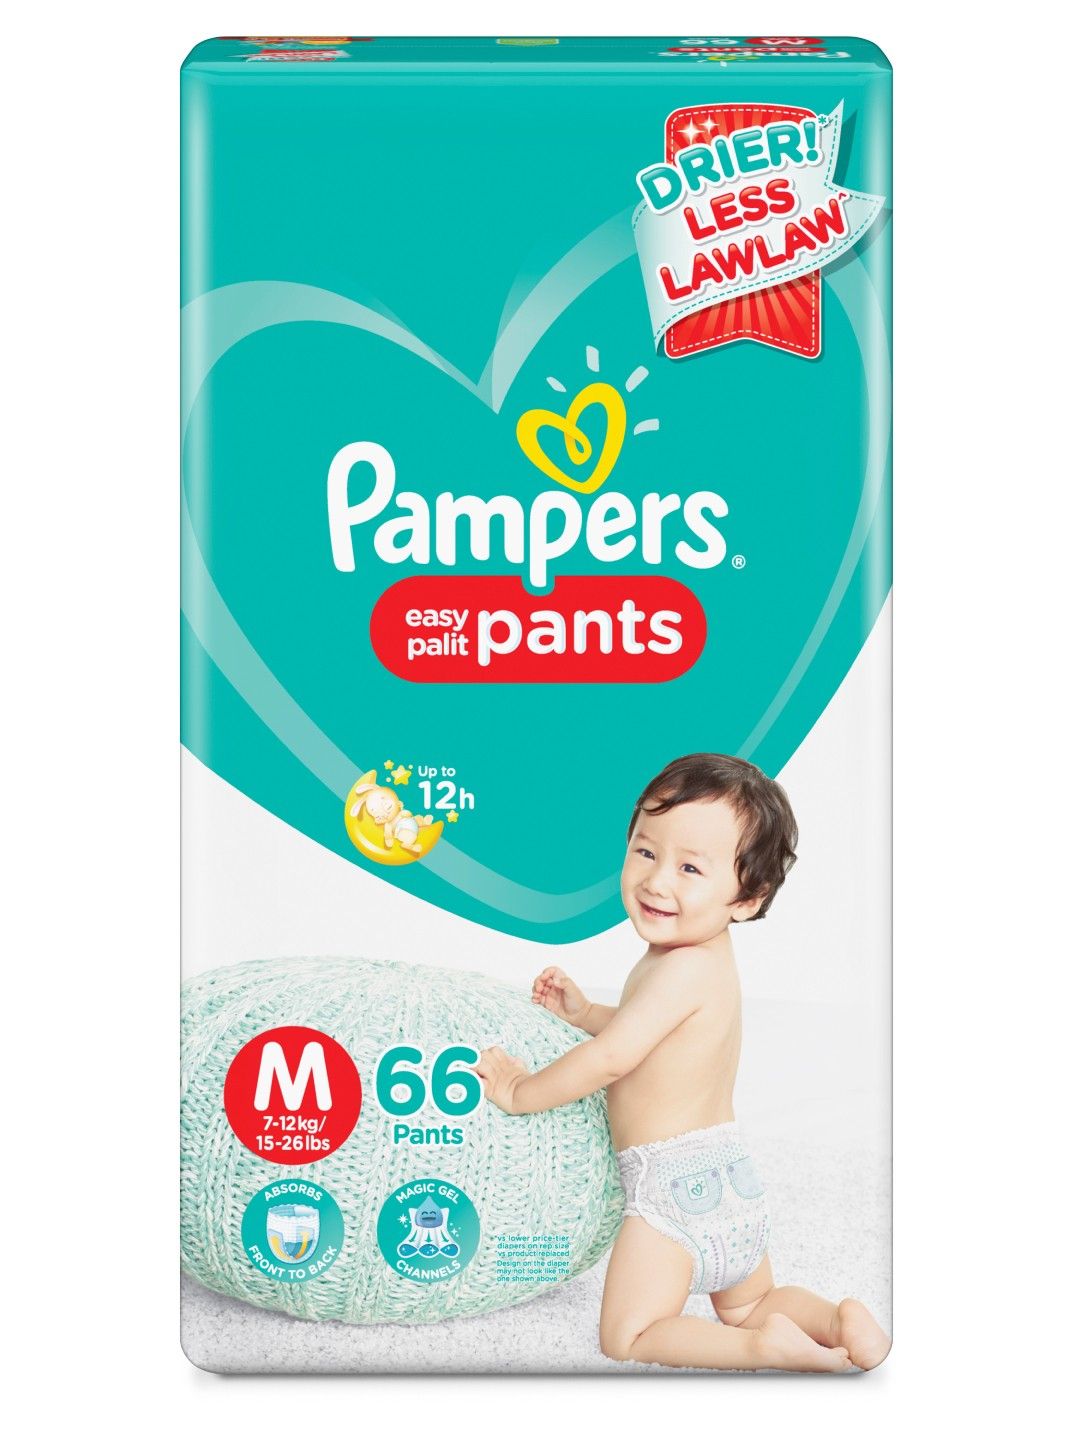 Pampers Baby Dry Pants Medium 66s x 1 pack (66 pcs)